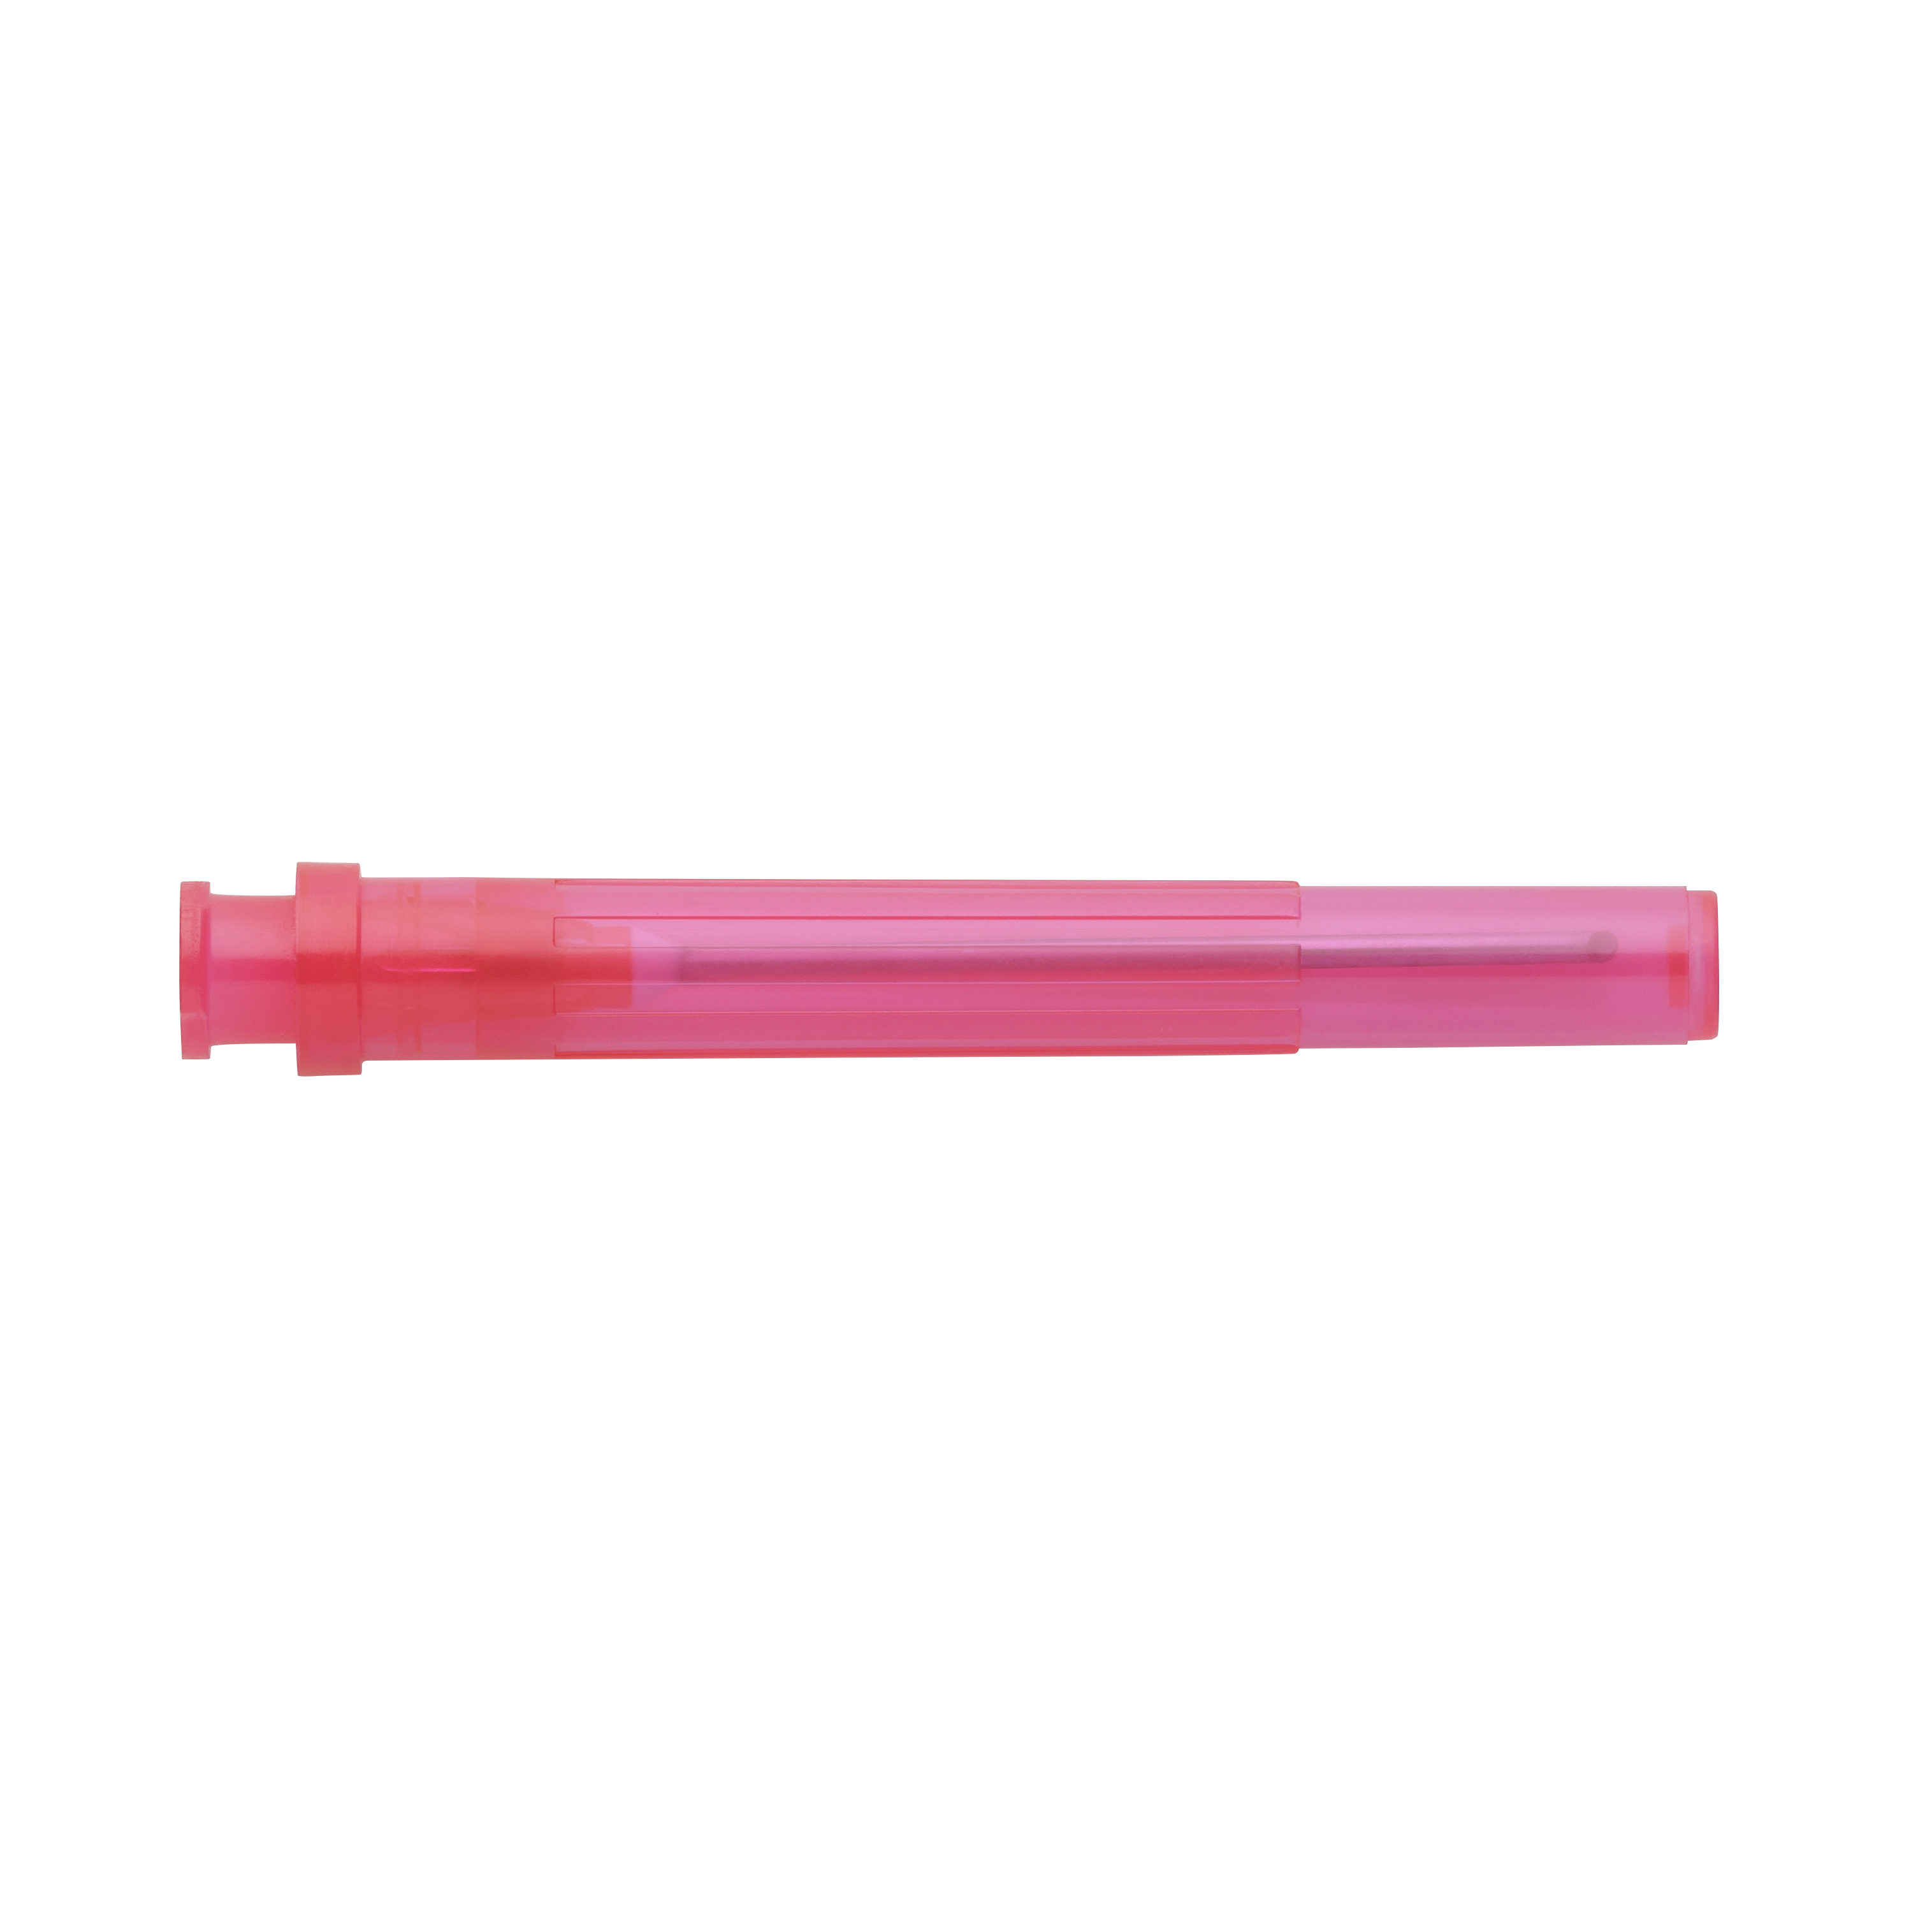 Terumo Unisharp Blunt Fill Needle 18g x 1 1/2 inch - Bevelled 40 degrees (Red) image 1